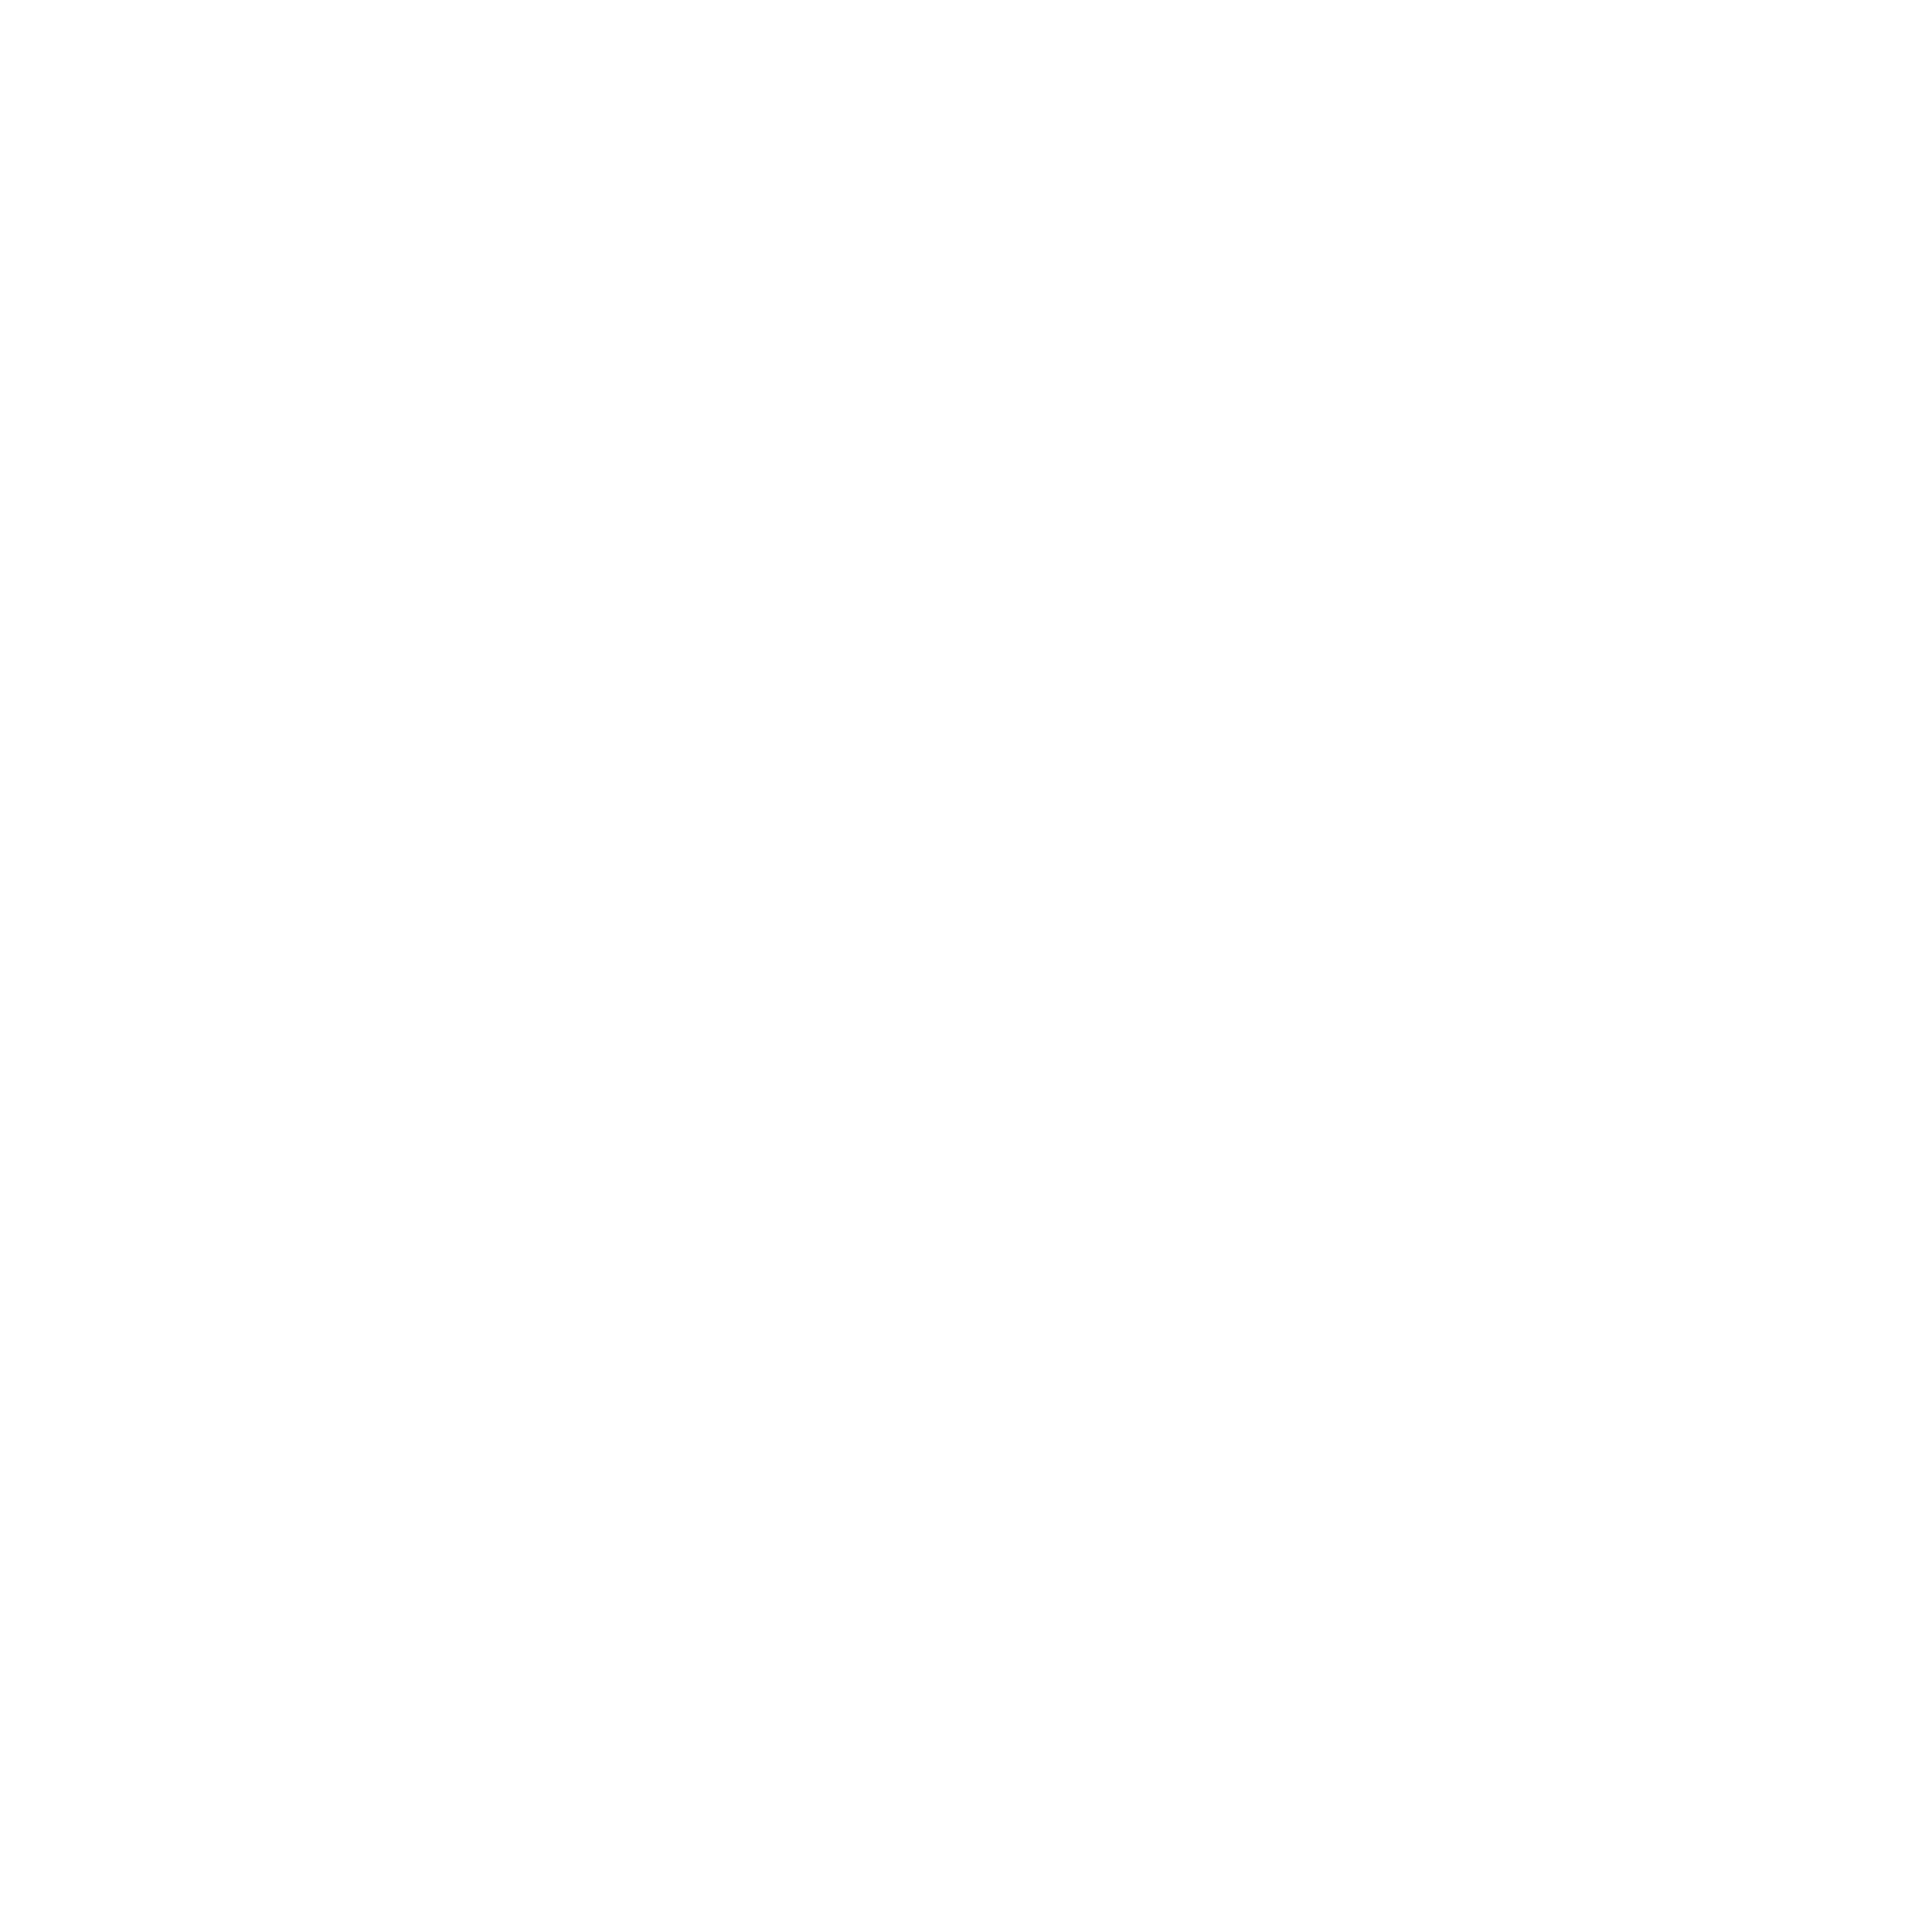 Adidas-Logo-PNG-Image-Transparent-Background.png